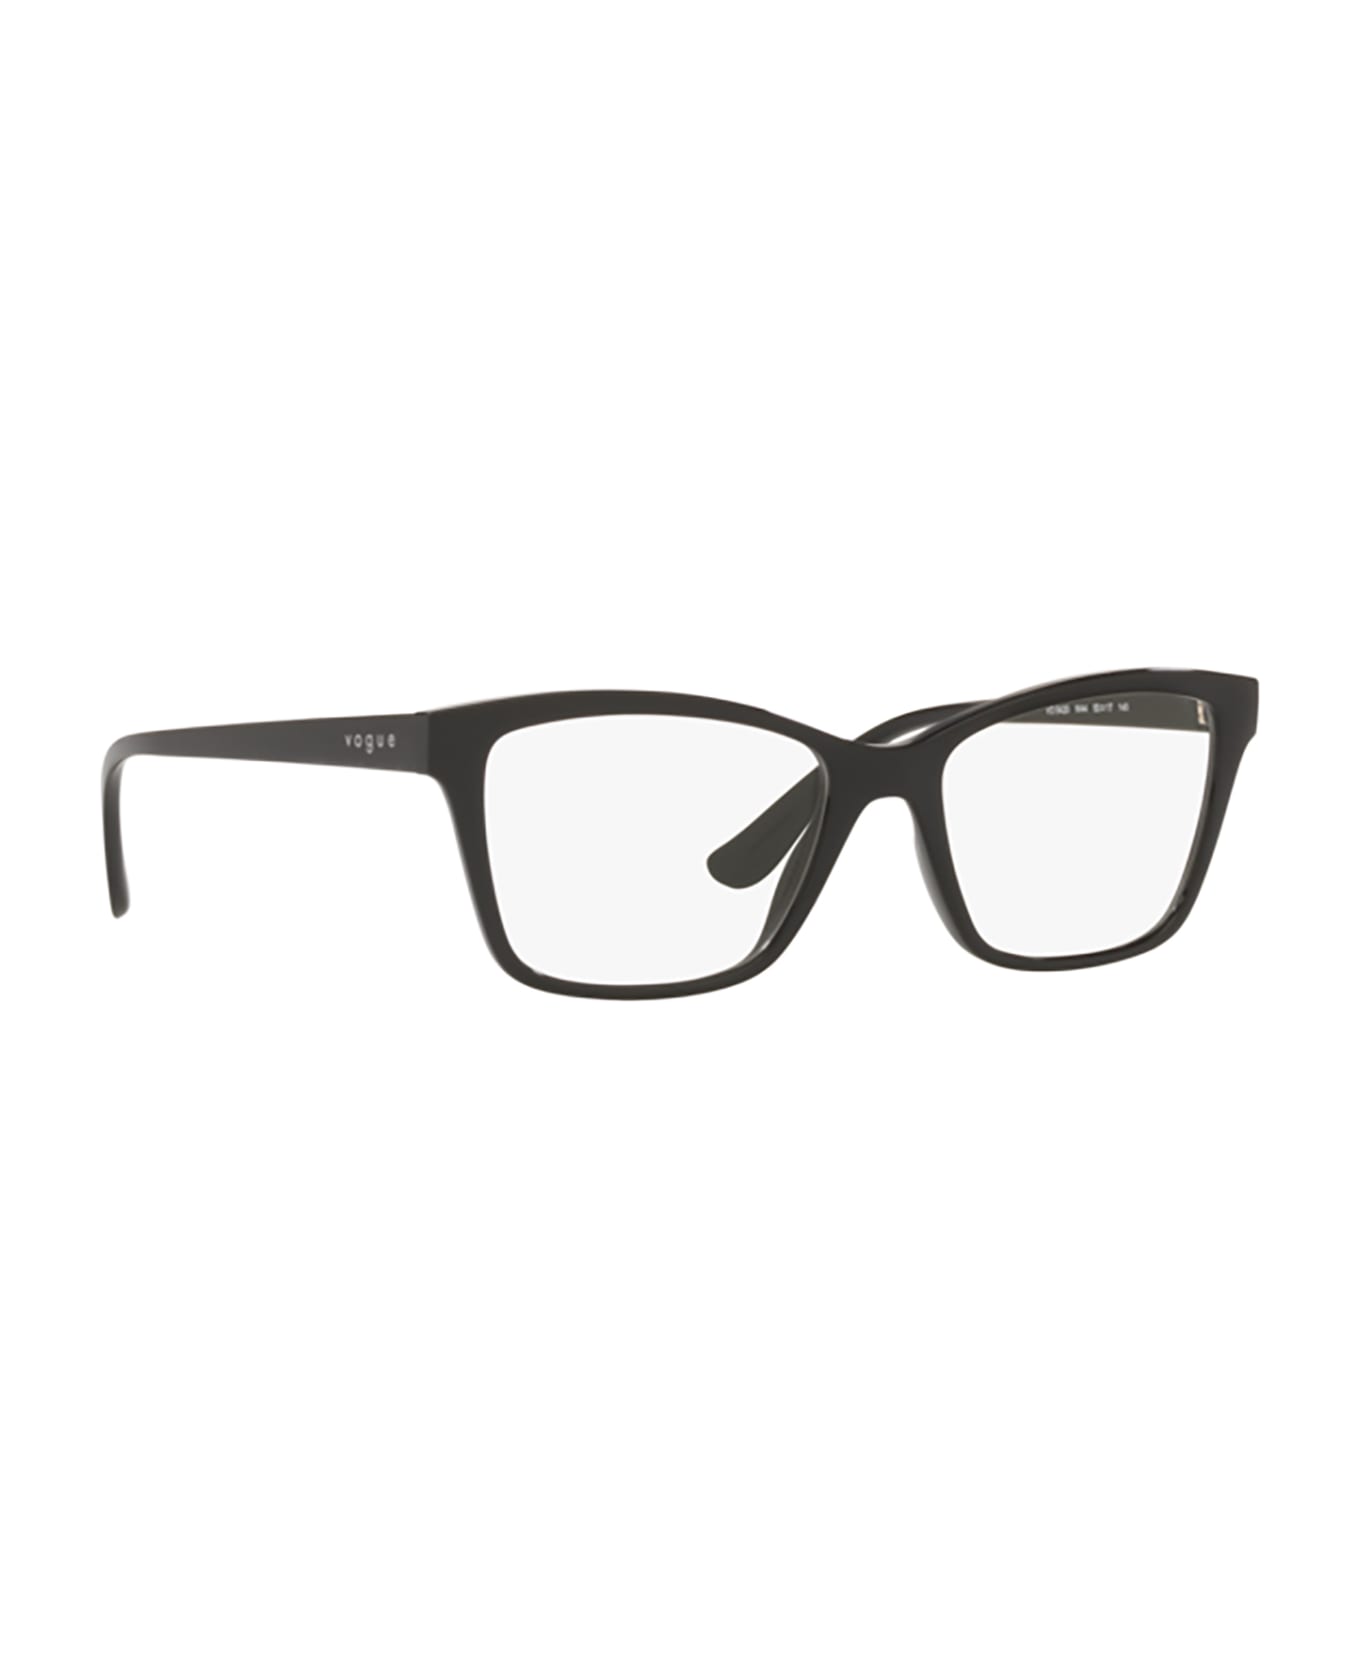 Vogue Eyewear Vo5420 Black Glasses - Black